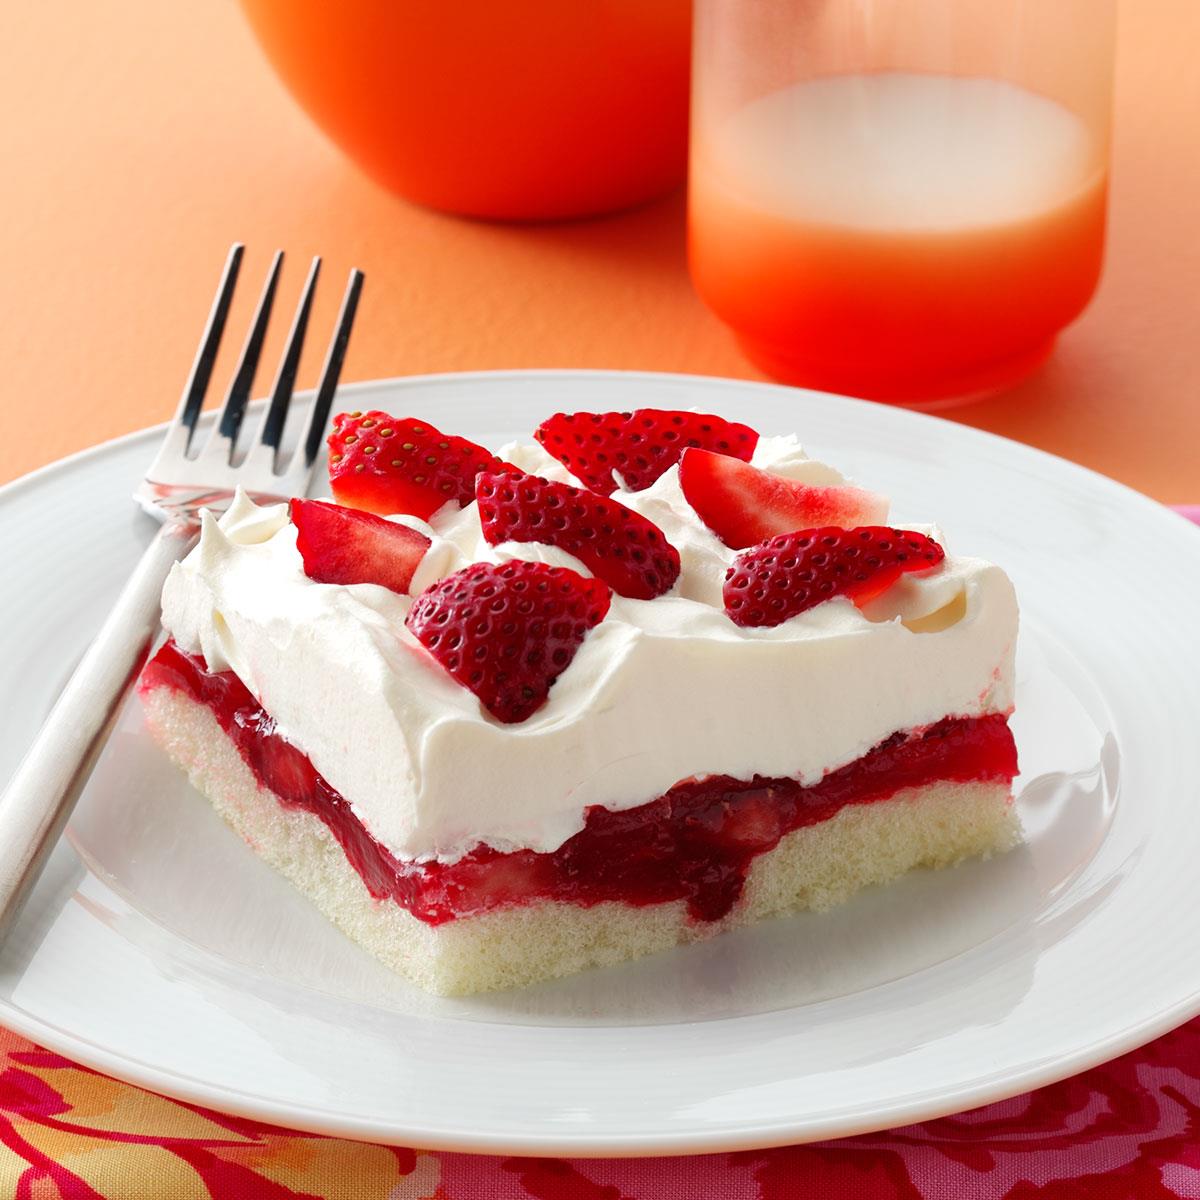 Strawberry Ladyfinger Dessert Recipe How To Make It Taste Of Home